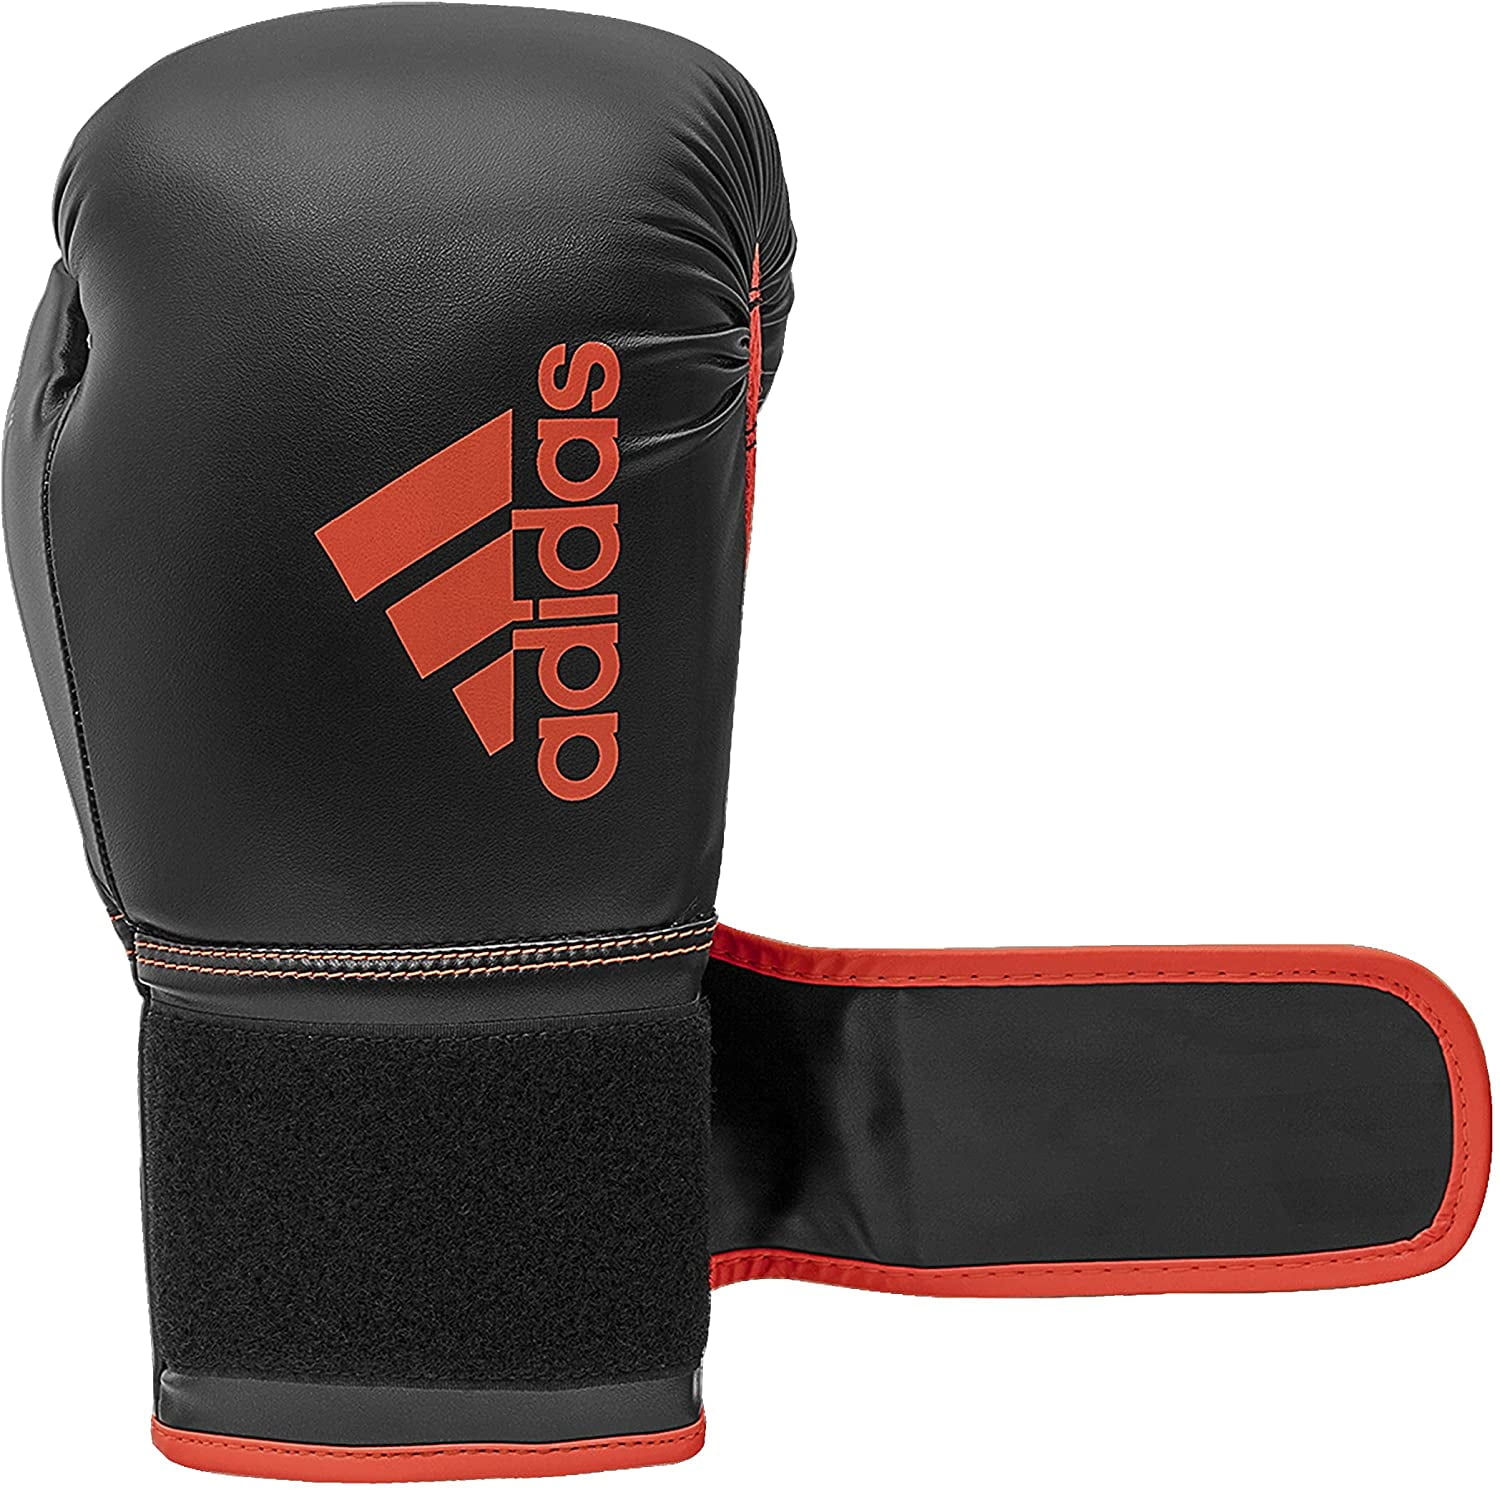 Adidas Hybrid 80 Boxing Gloves, pair set - Training Gloves for Kickboxing -  Sparring Gloves for Men, Women and Kids